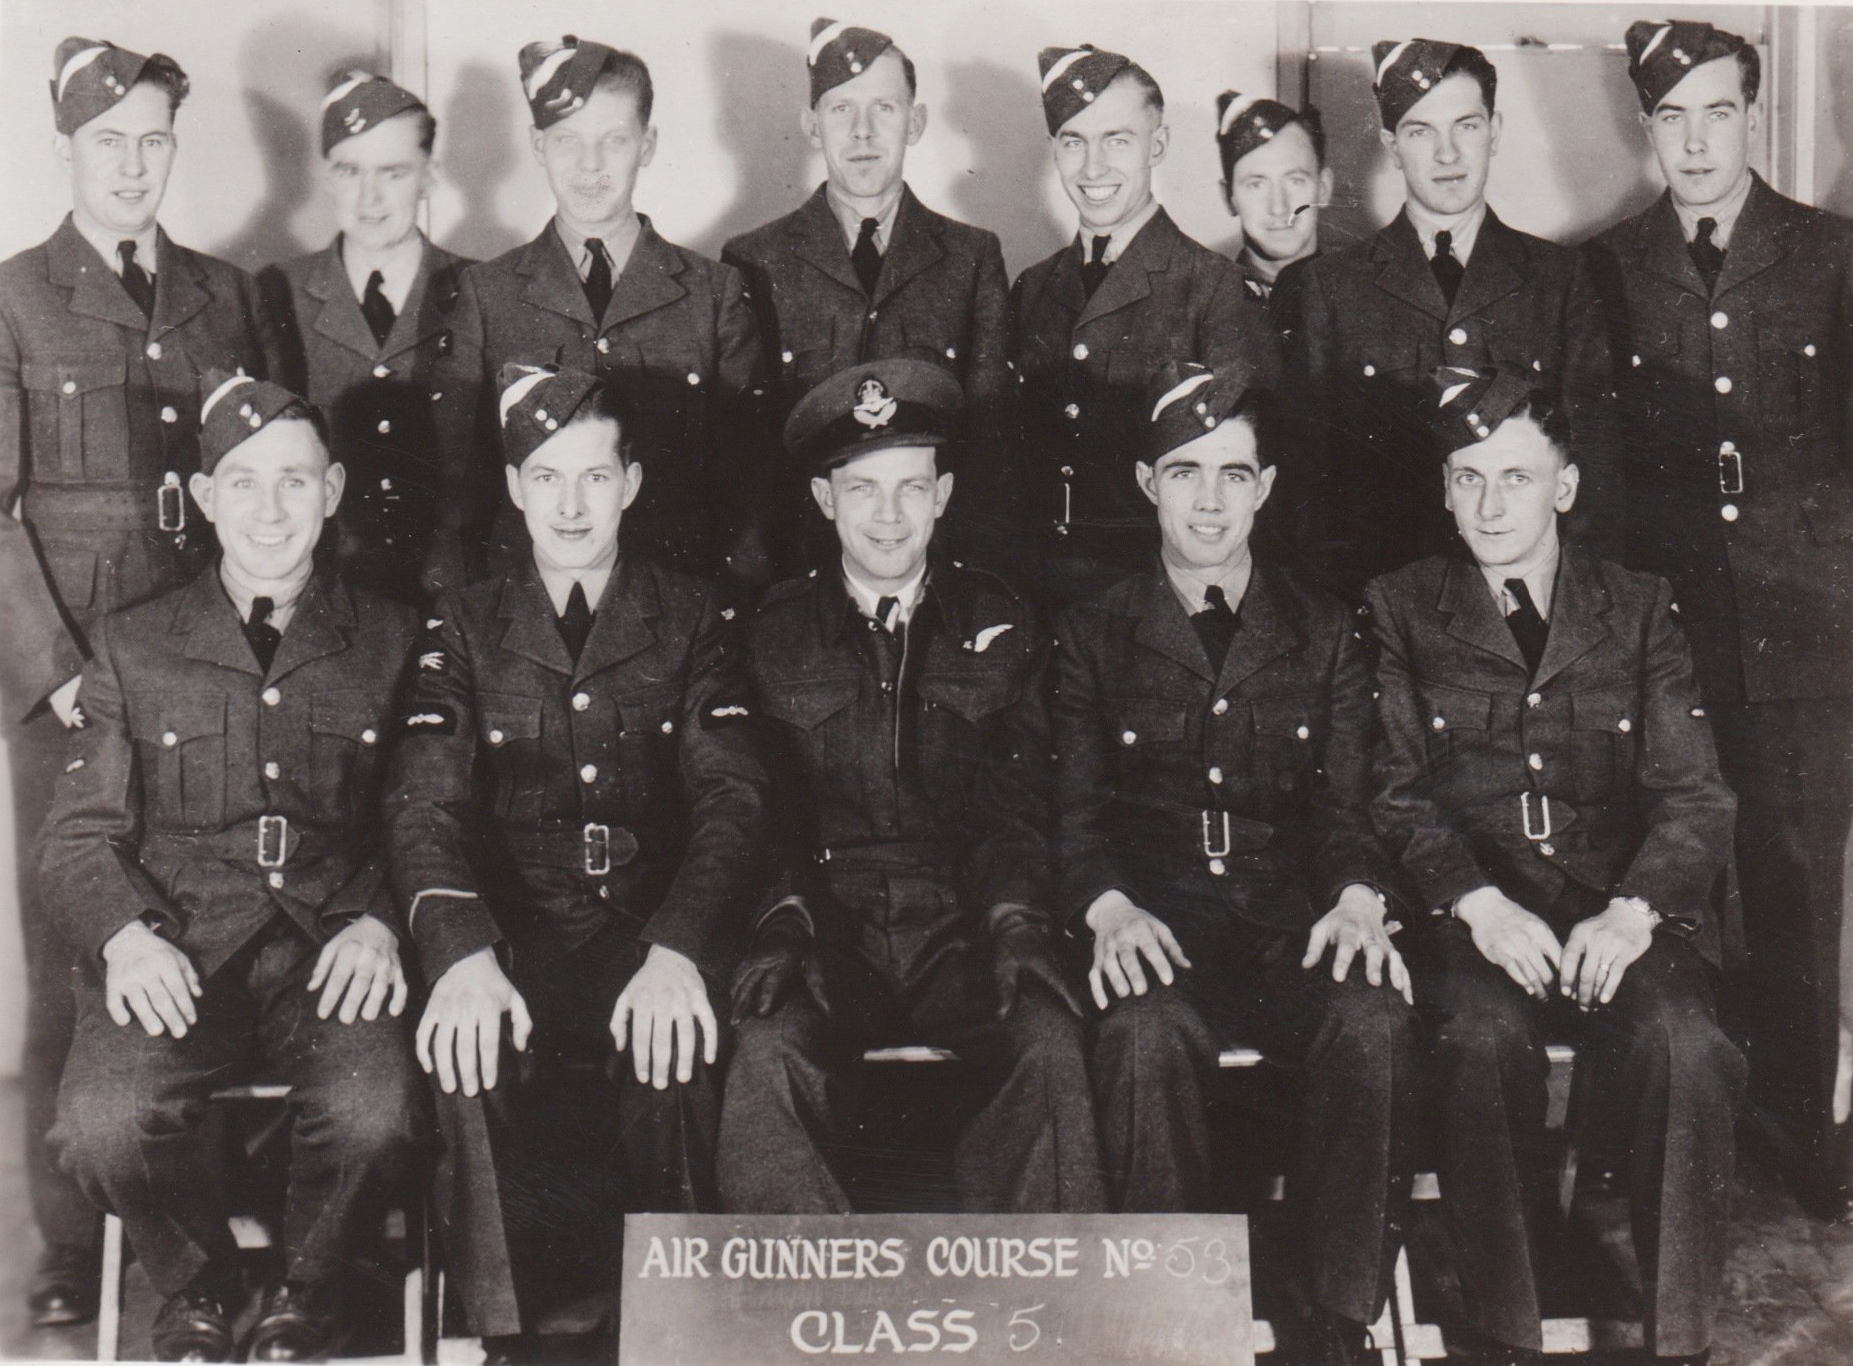 Roy Kitchener Forth, Delbert Oderkirk, Air Gunners Course